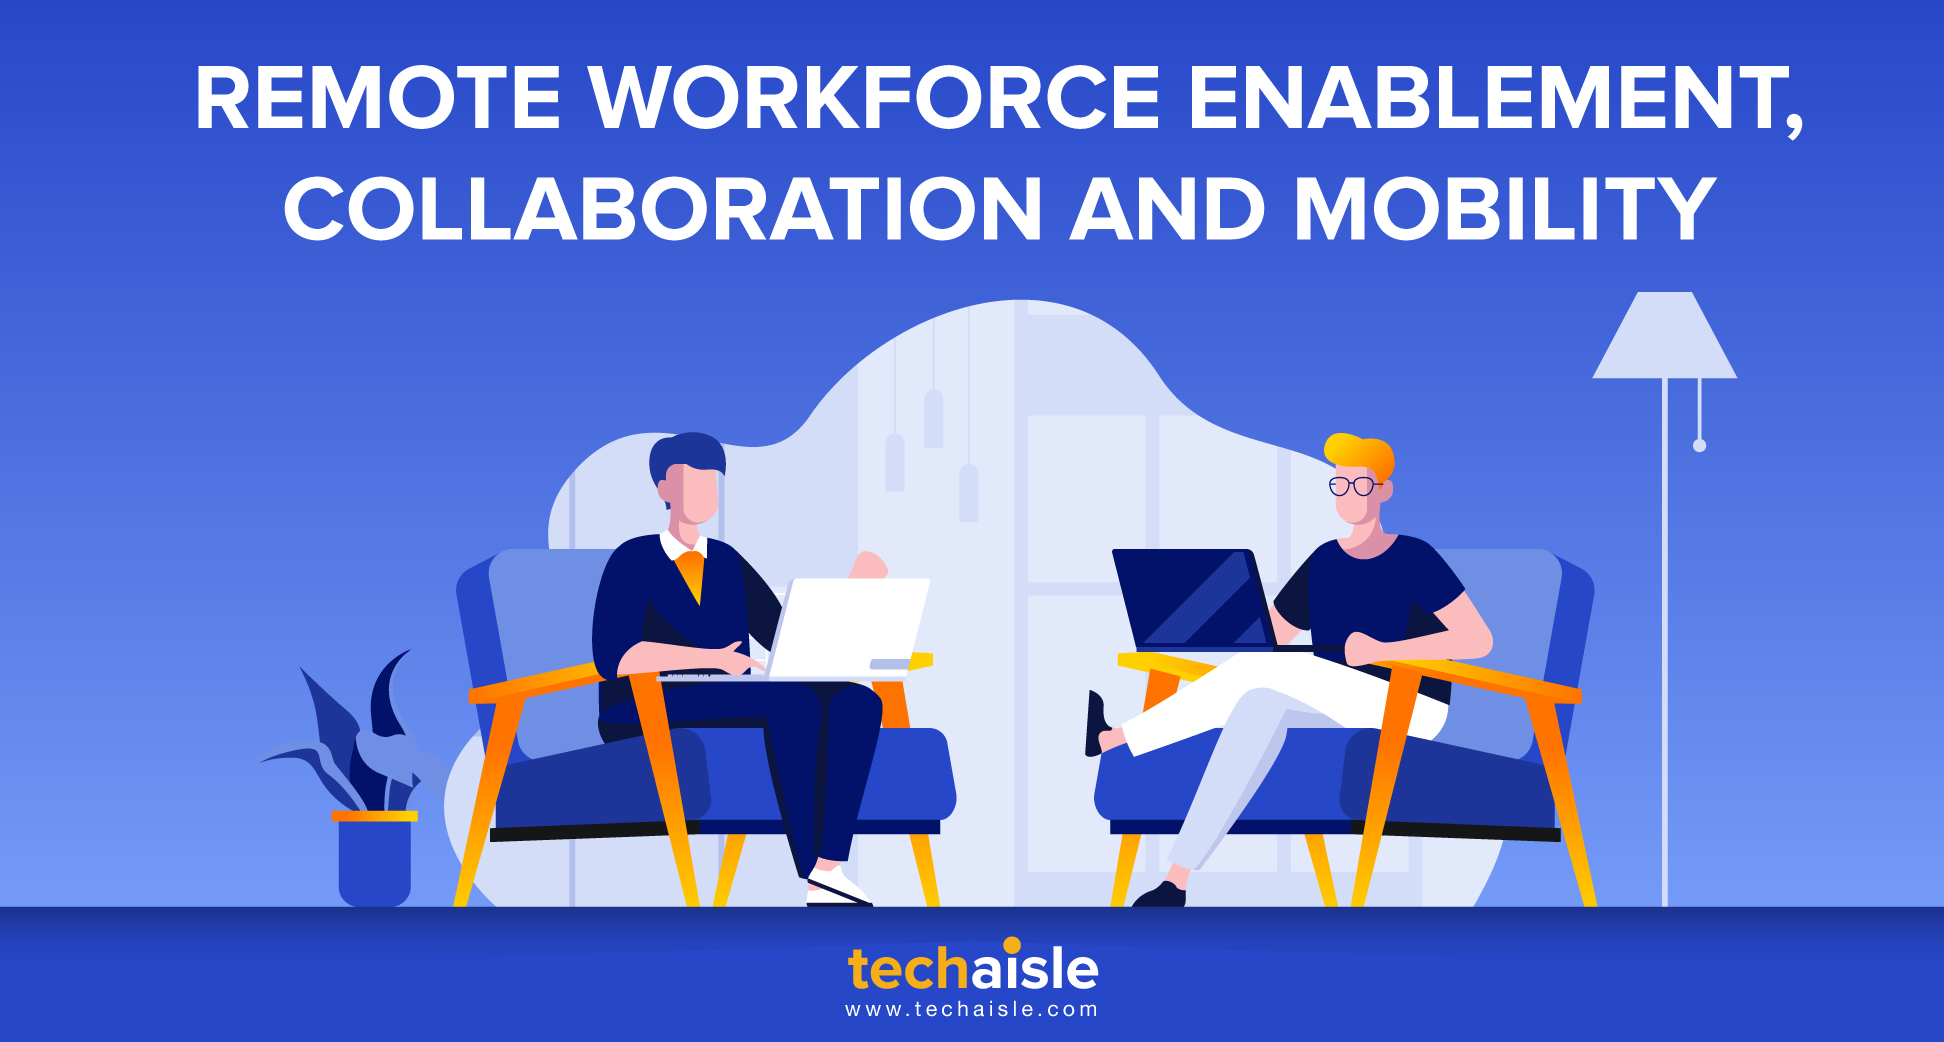 techaisle remote workforce enablement